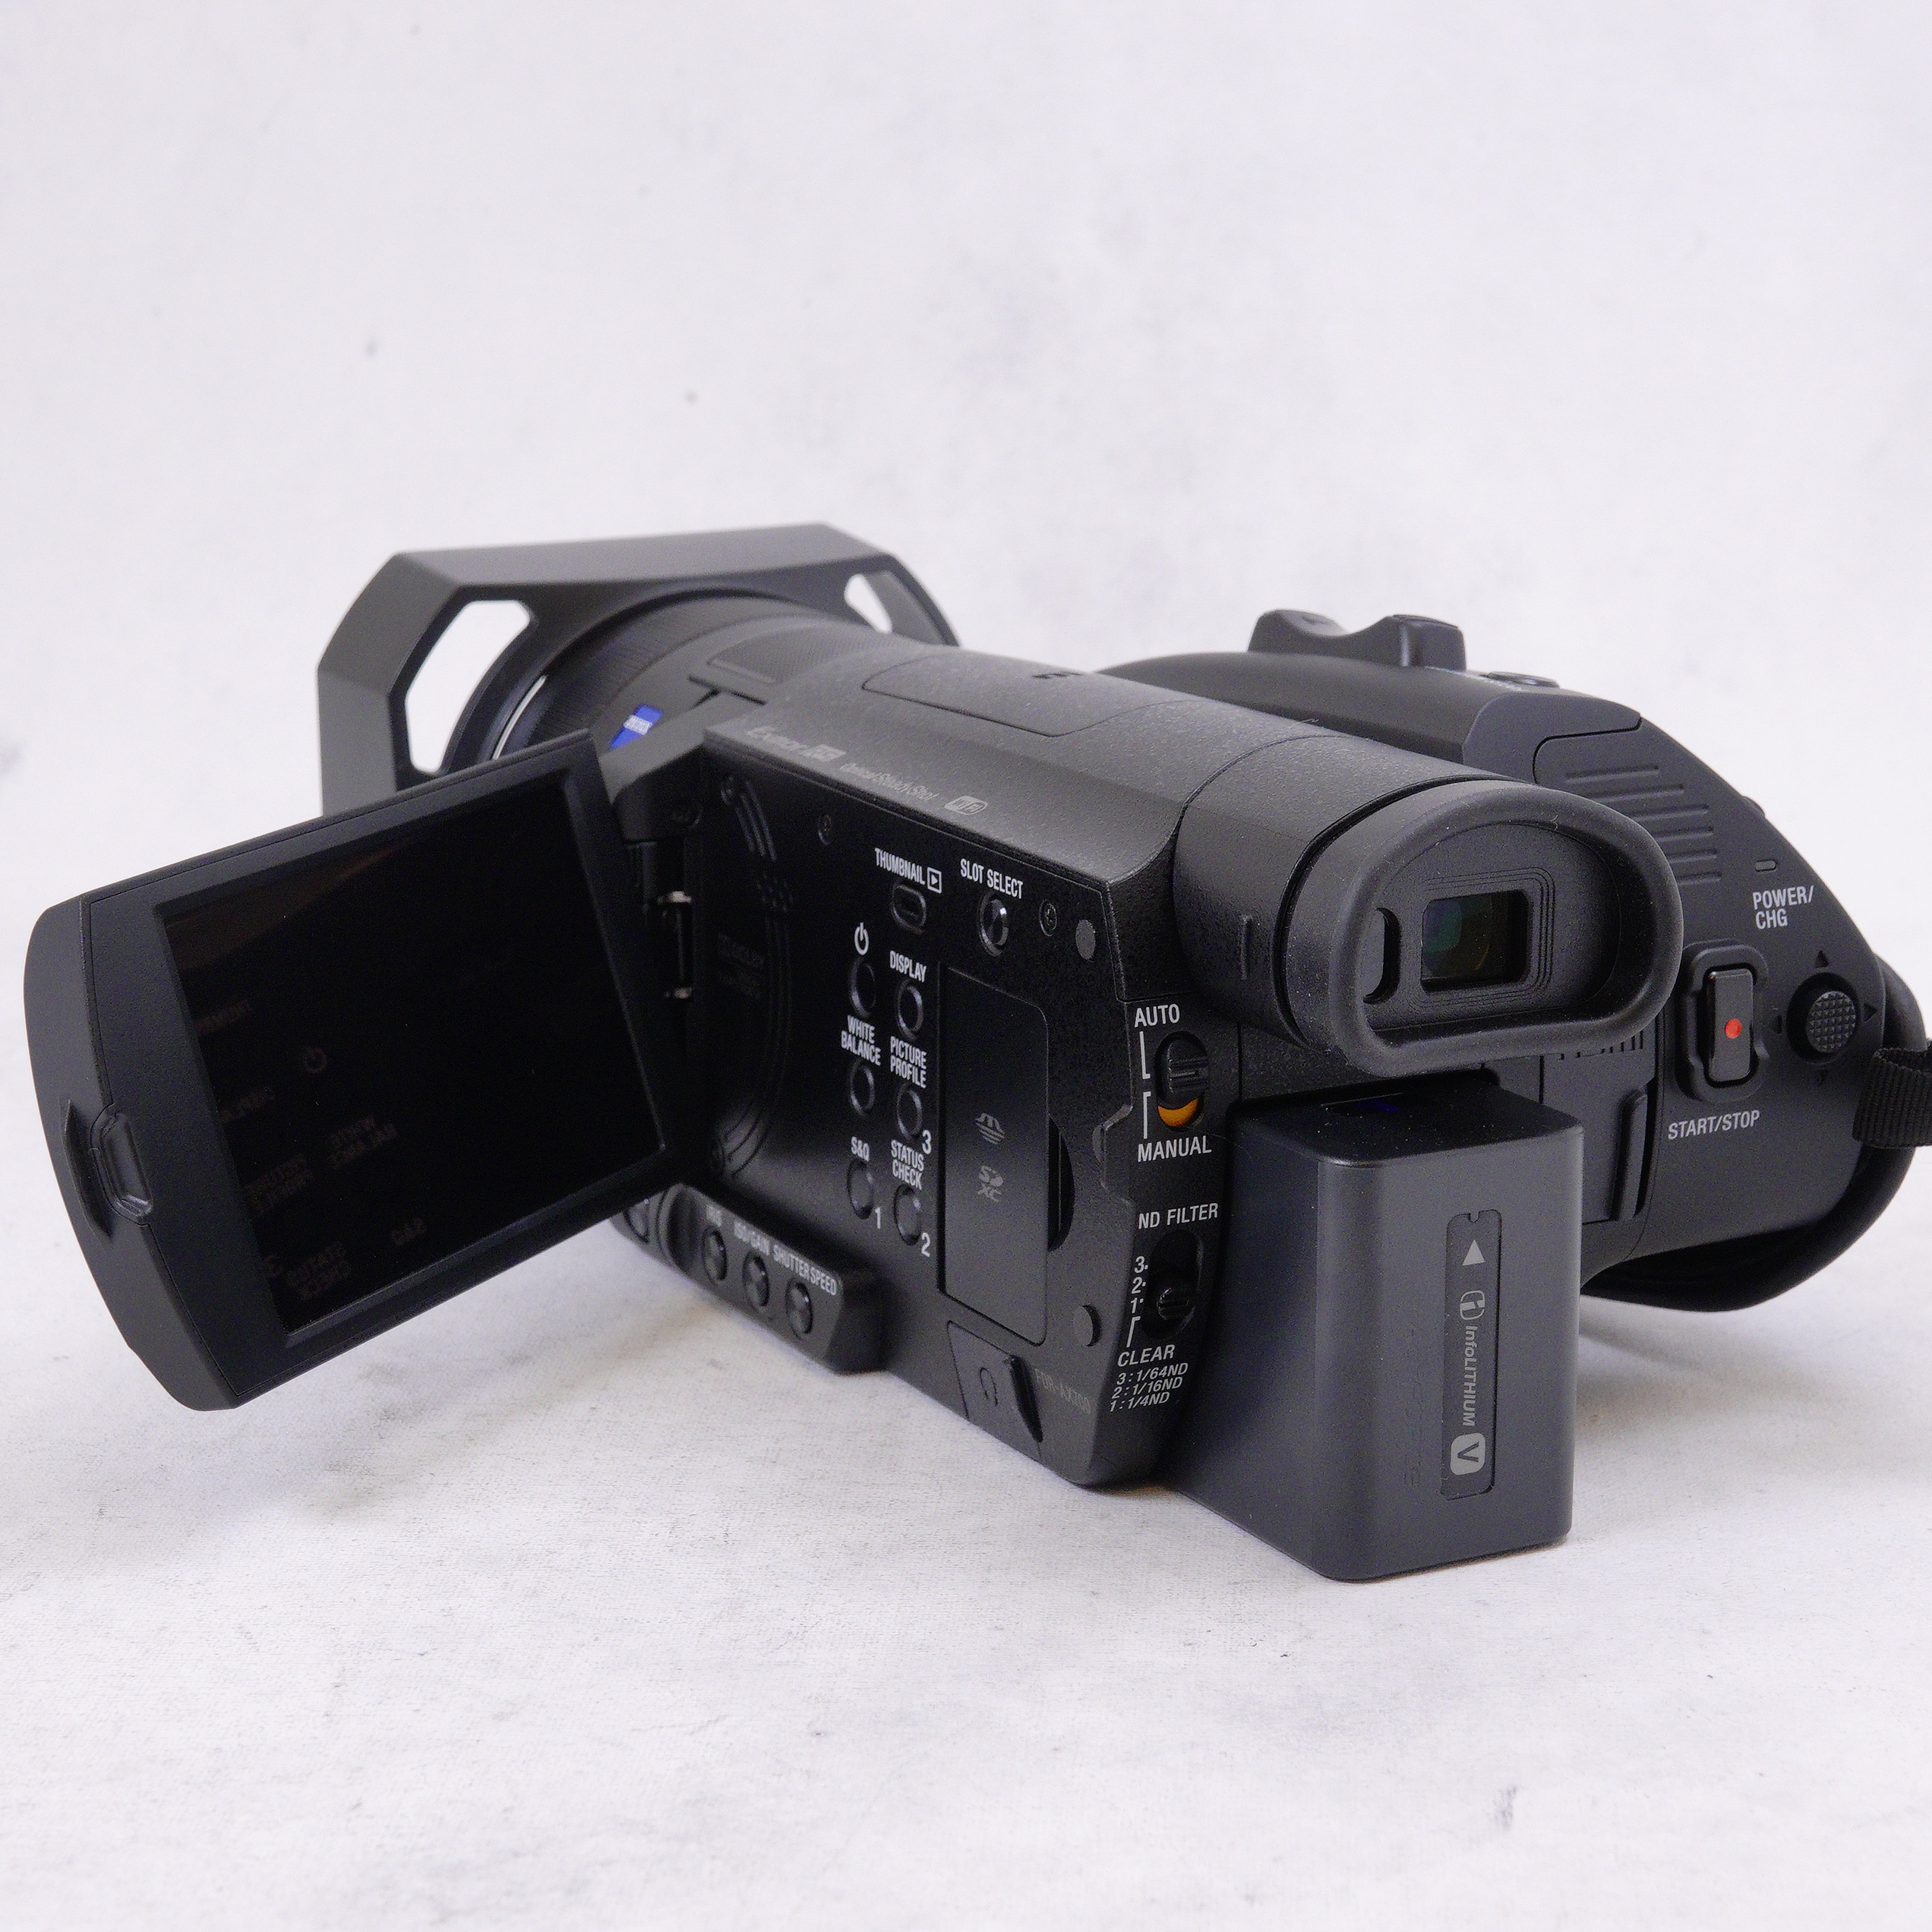 Cámara de video semiprofesional Sony FDR-AX700 4K NTSC/PAL